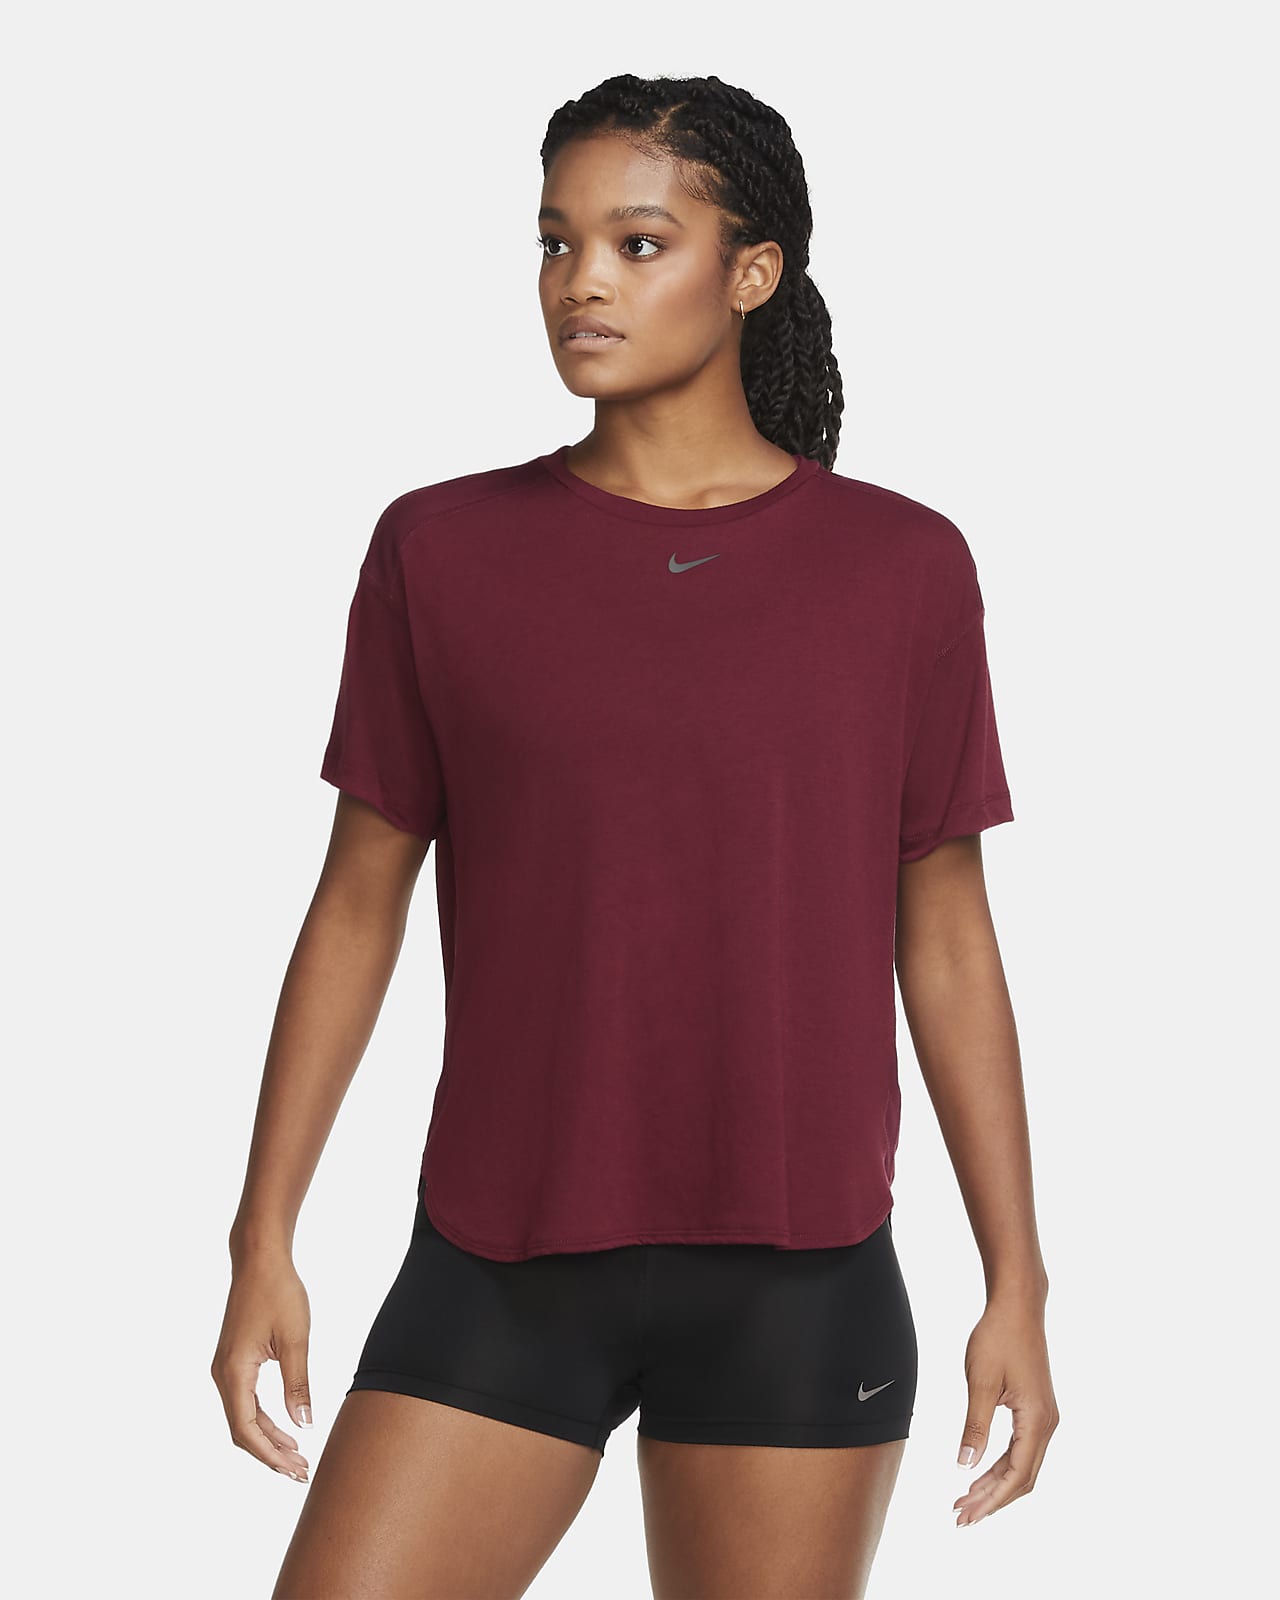 Nike Pro AeroAdapt Women's Short-Sleeve Top. Nike EG